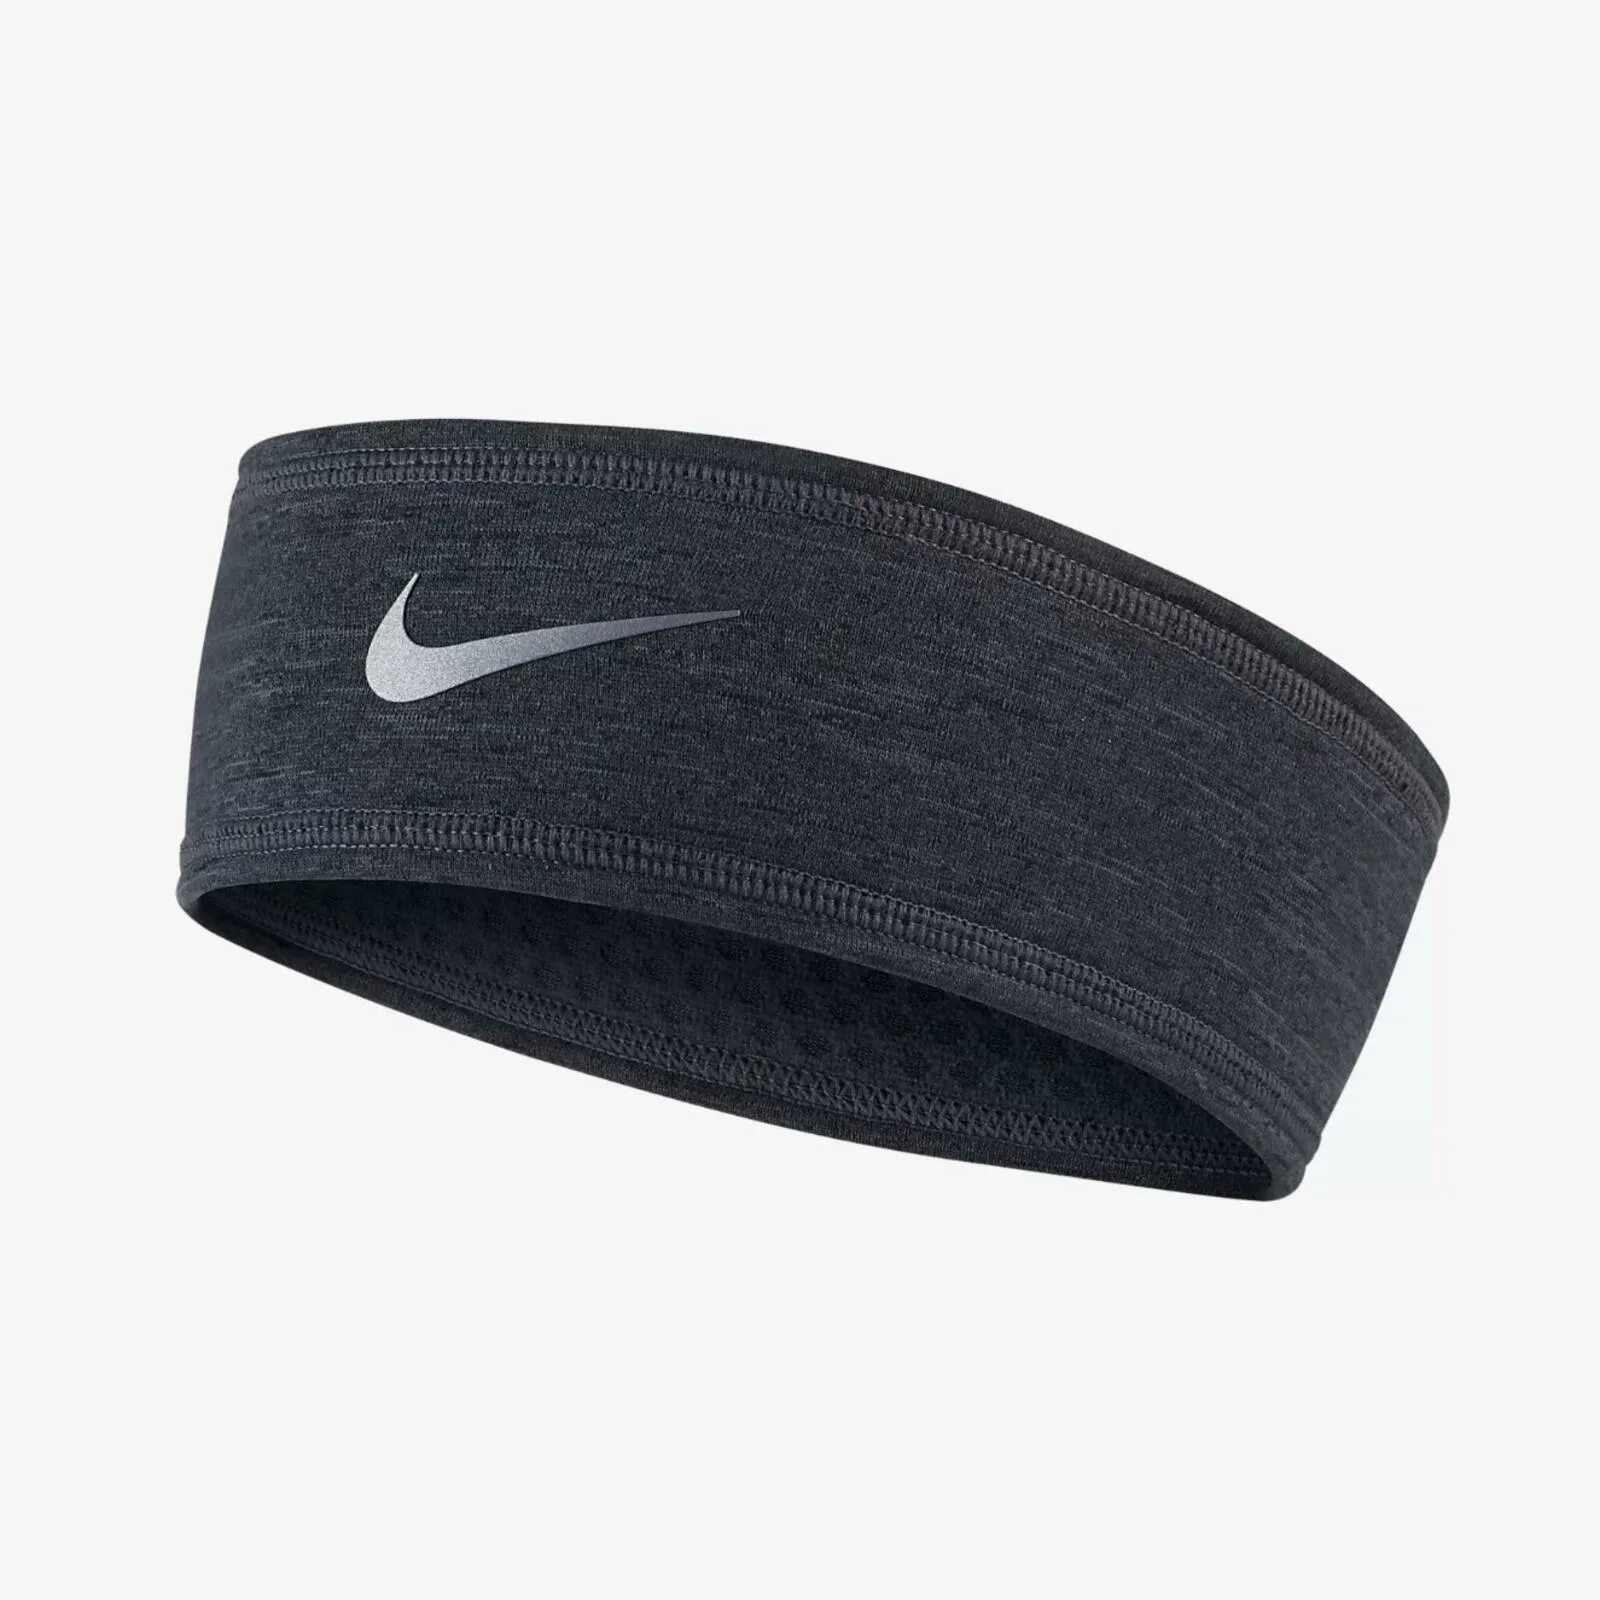 Headband Nike. Nike Running Headband. Nike Therma Fit повязка на голову. Повязка найк черная. Найк на голову